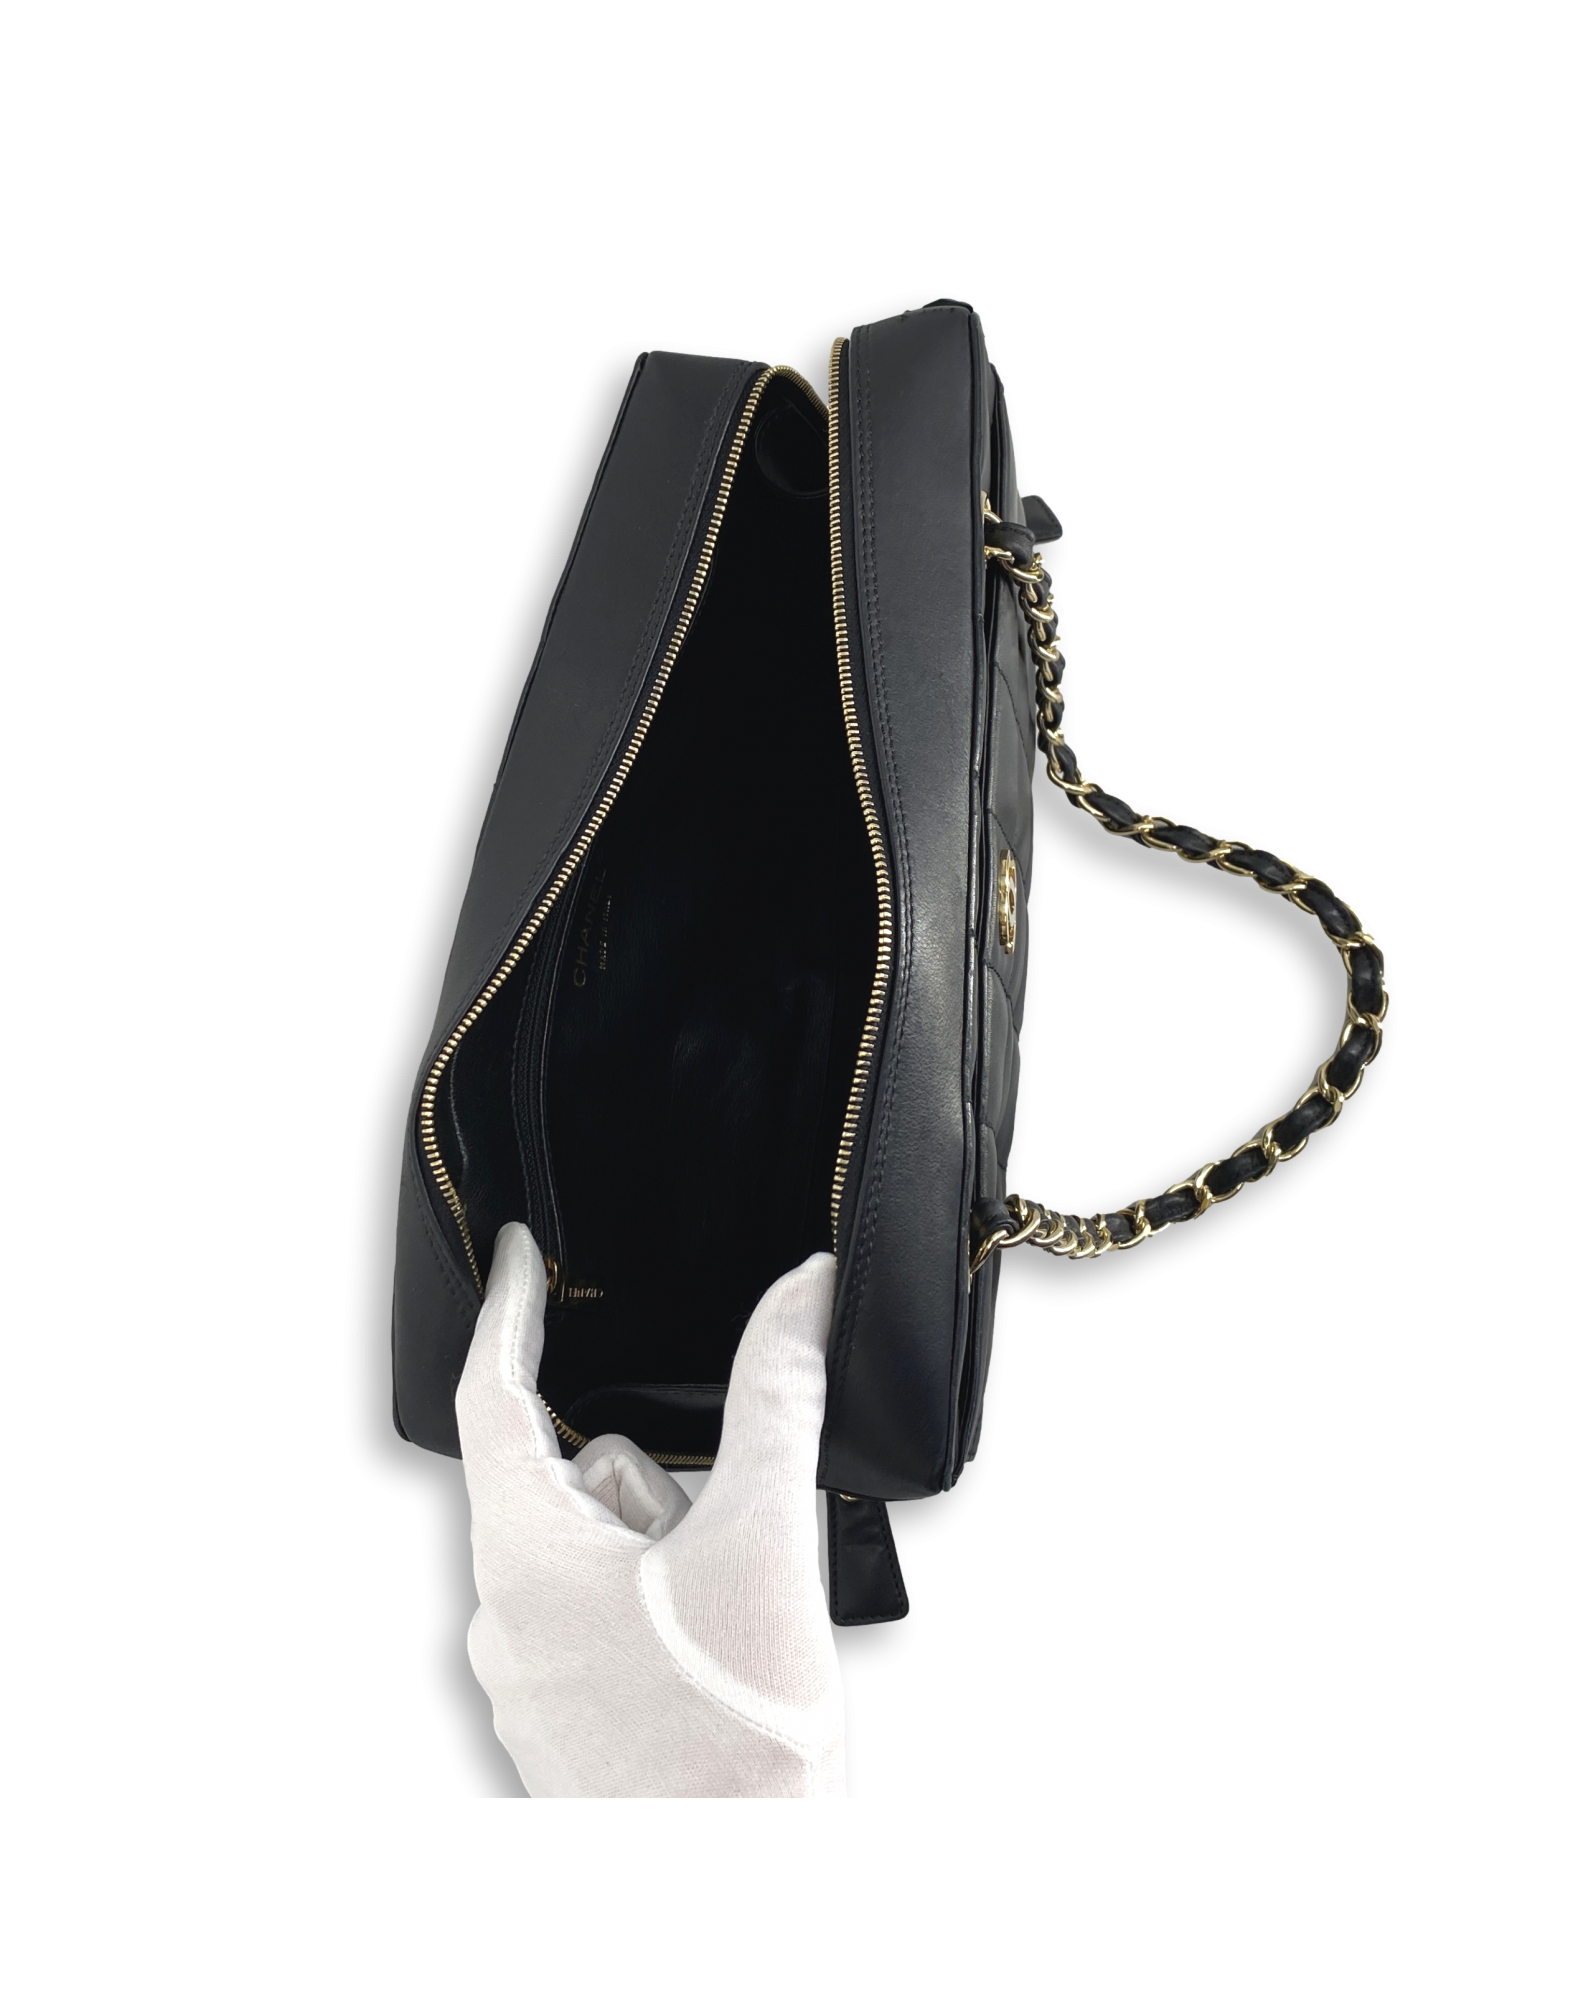 CHANEL, Bags, Chanel Chocolate Bar Handbag Caviar Leather Black